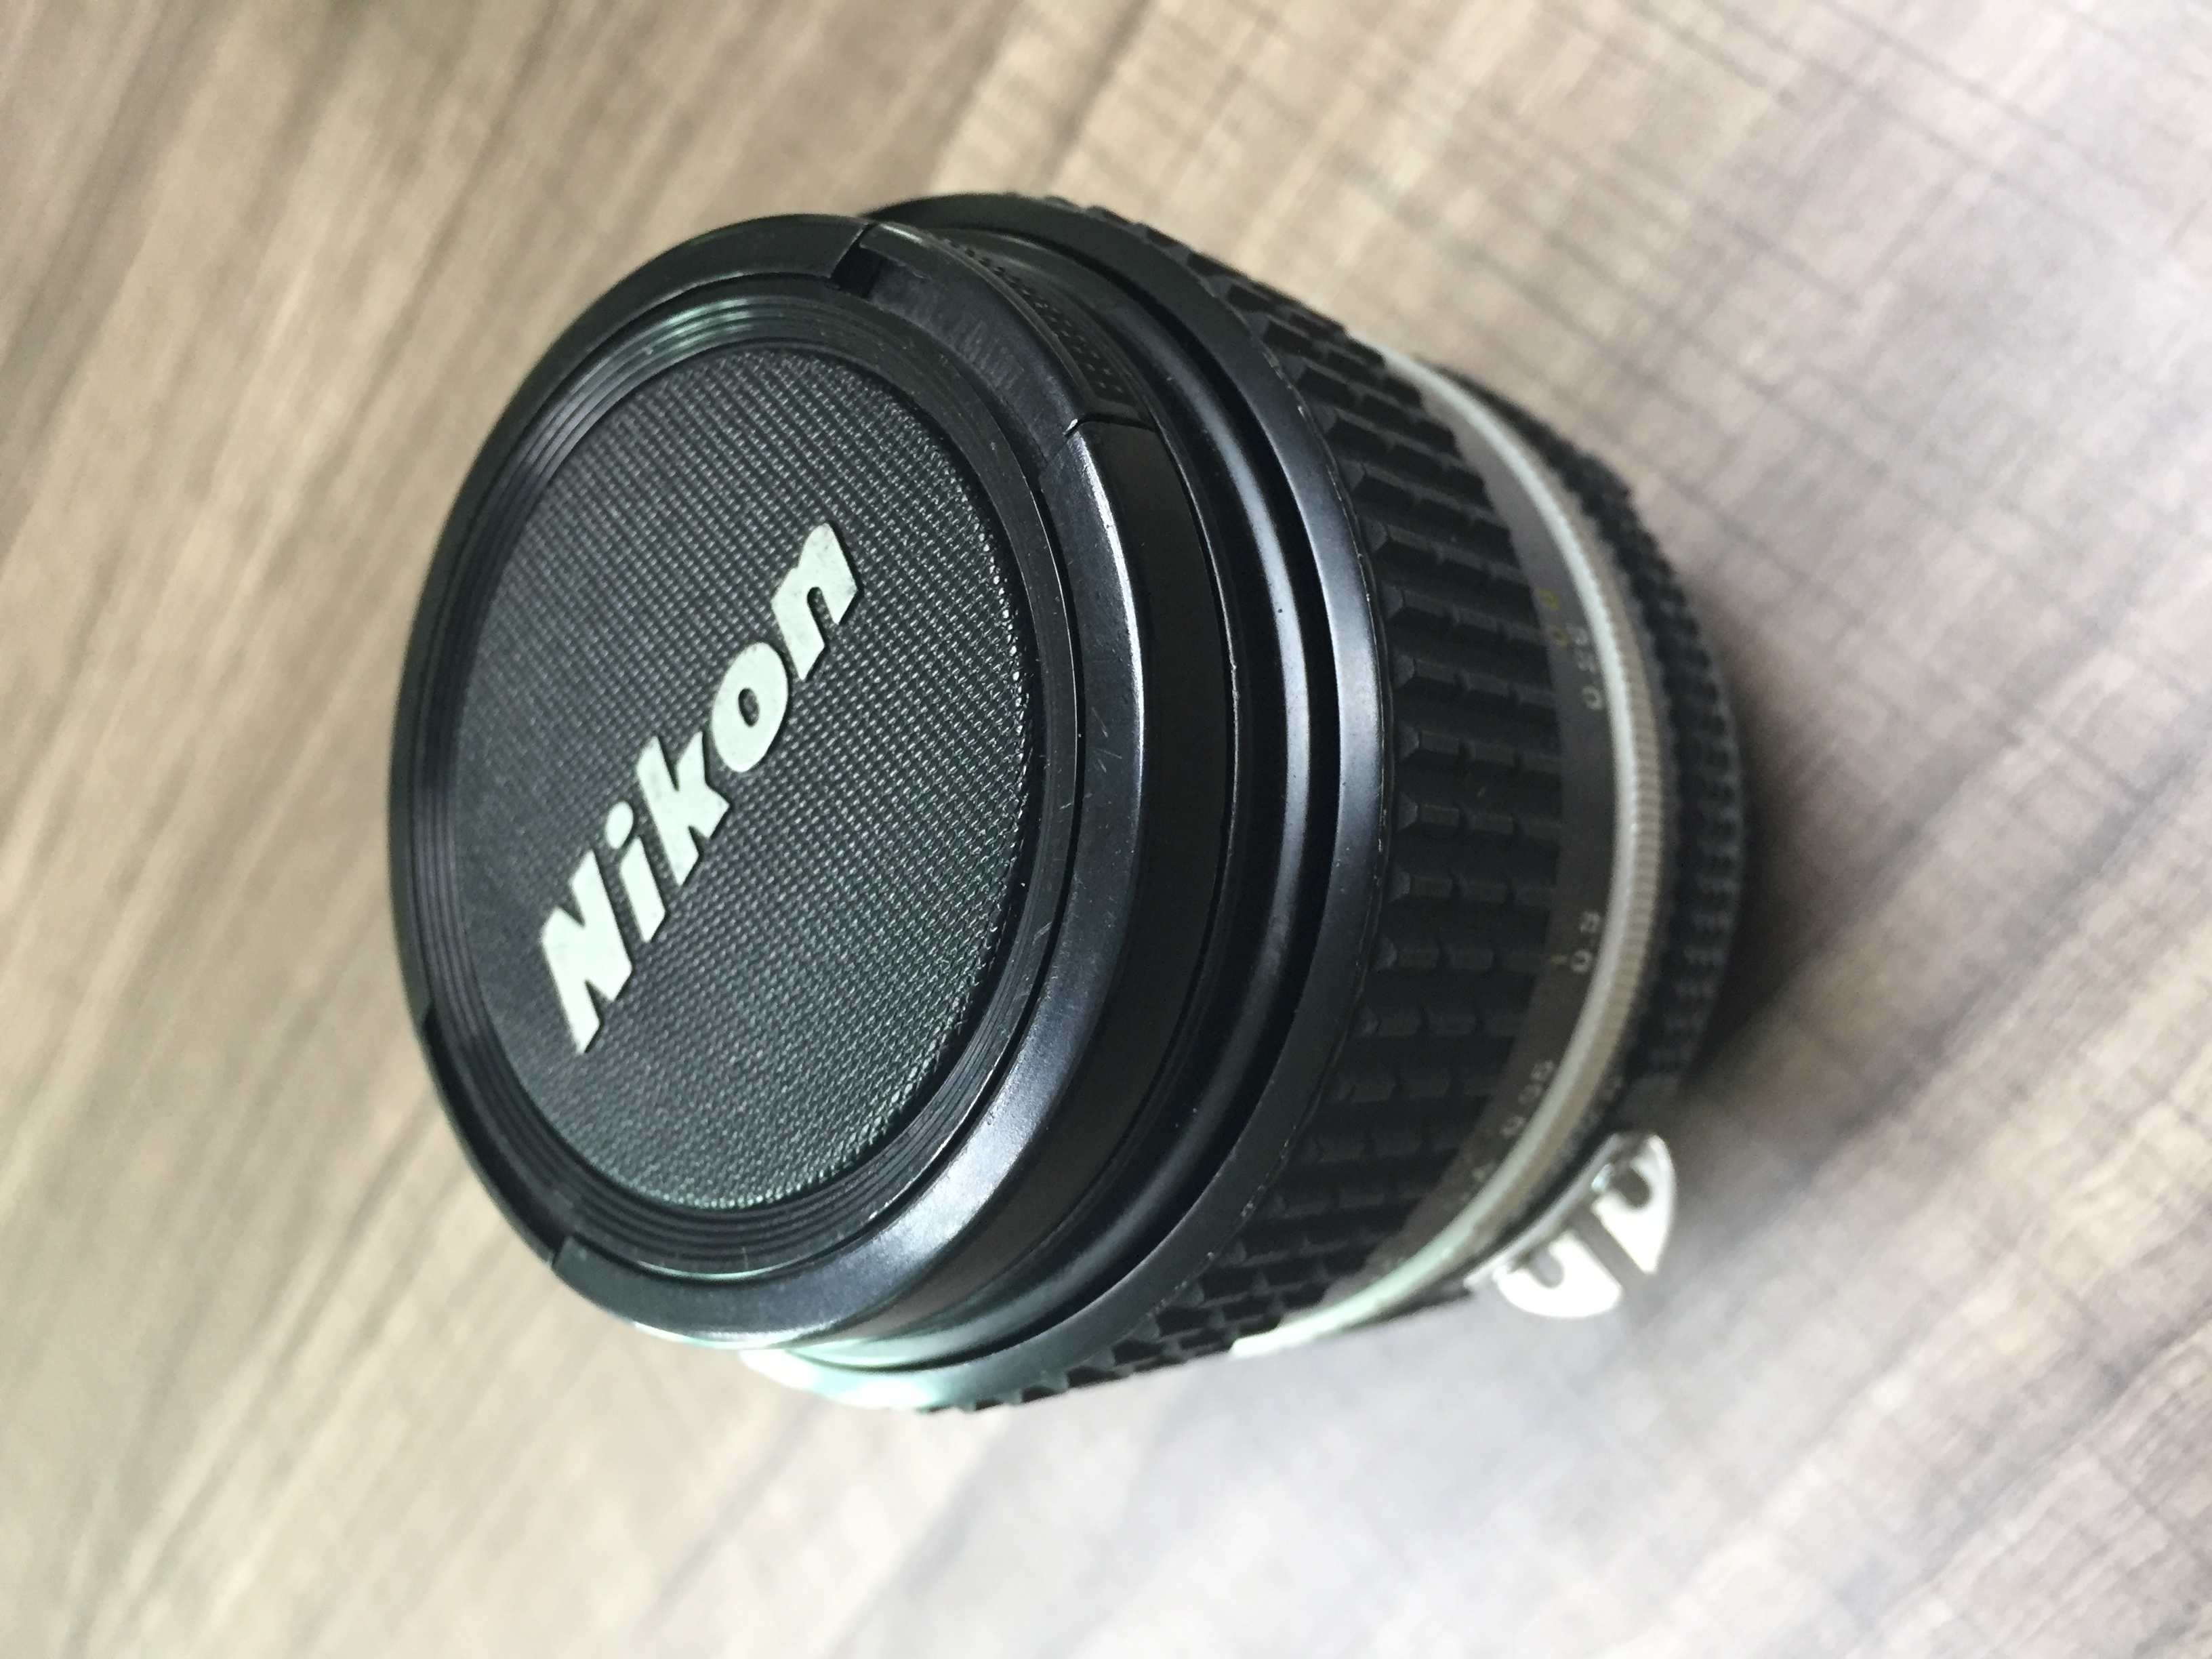  NIKON Nikkor AIS 28 F2.8 Manual Focus Lens